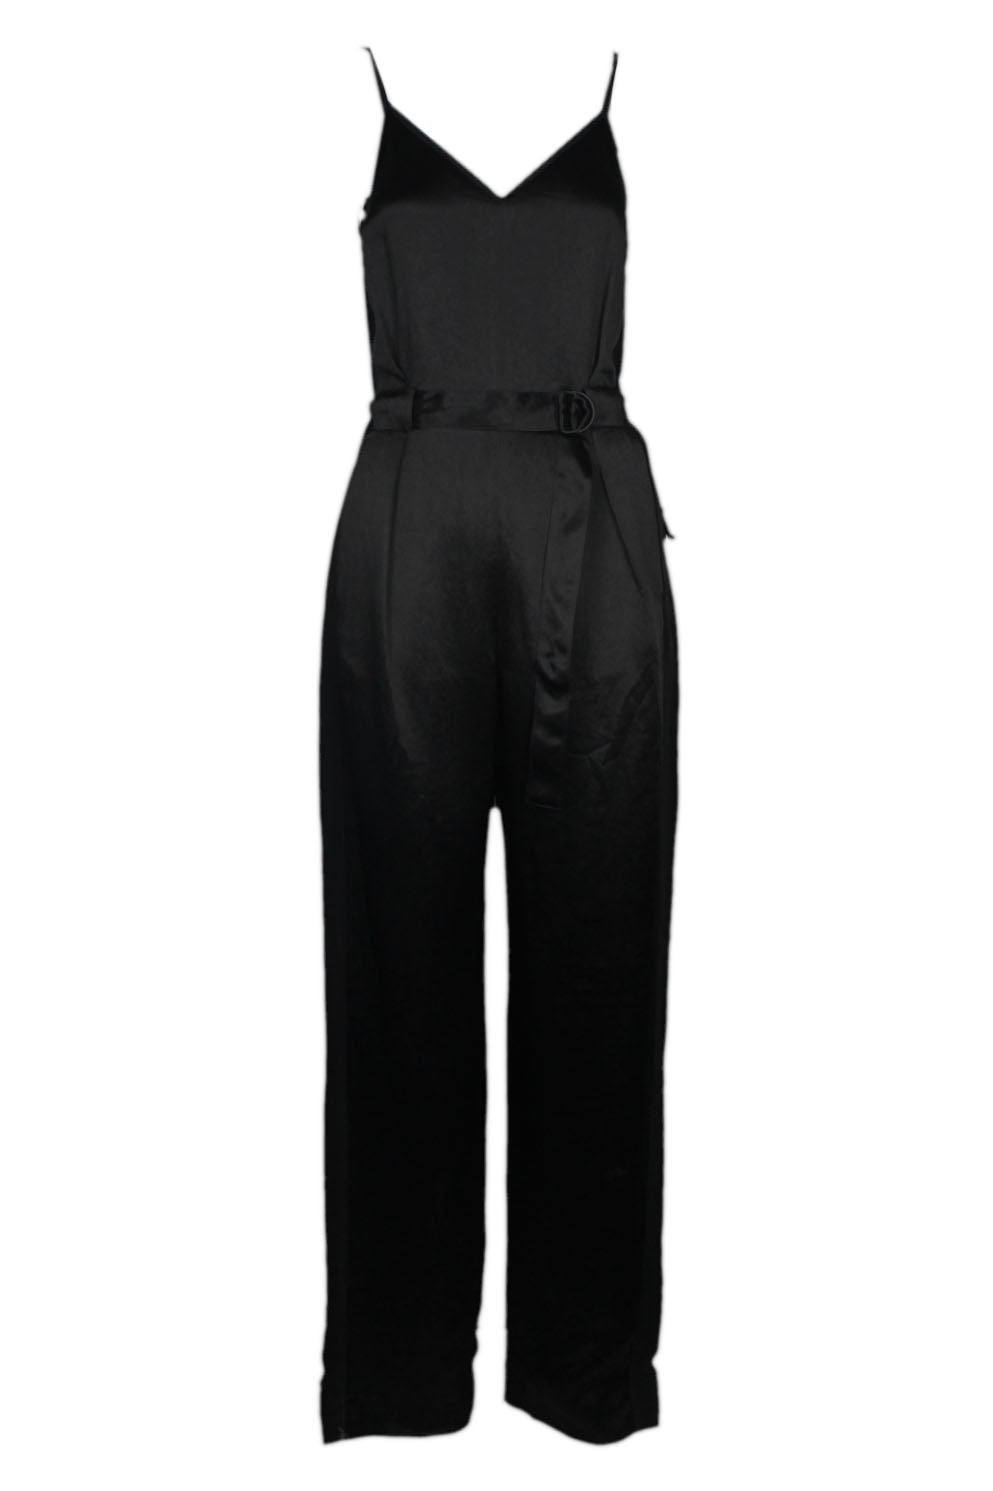 rag and bone black satin jumpsuit. features sleeveless top design, side zipper, side panel design with matte finish, adjustable waist belt, front and back pockets